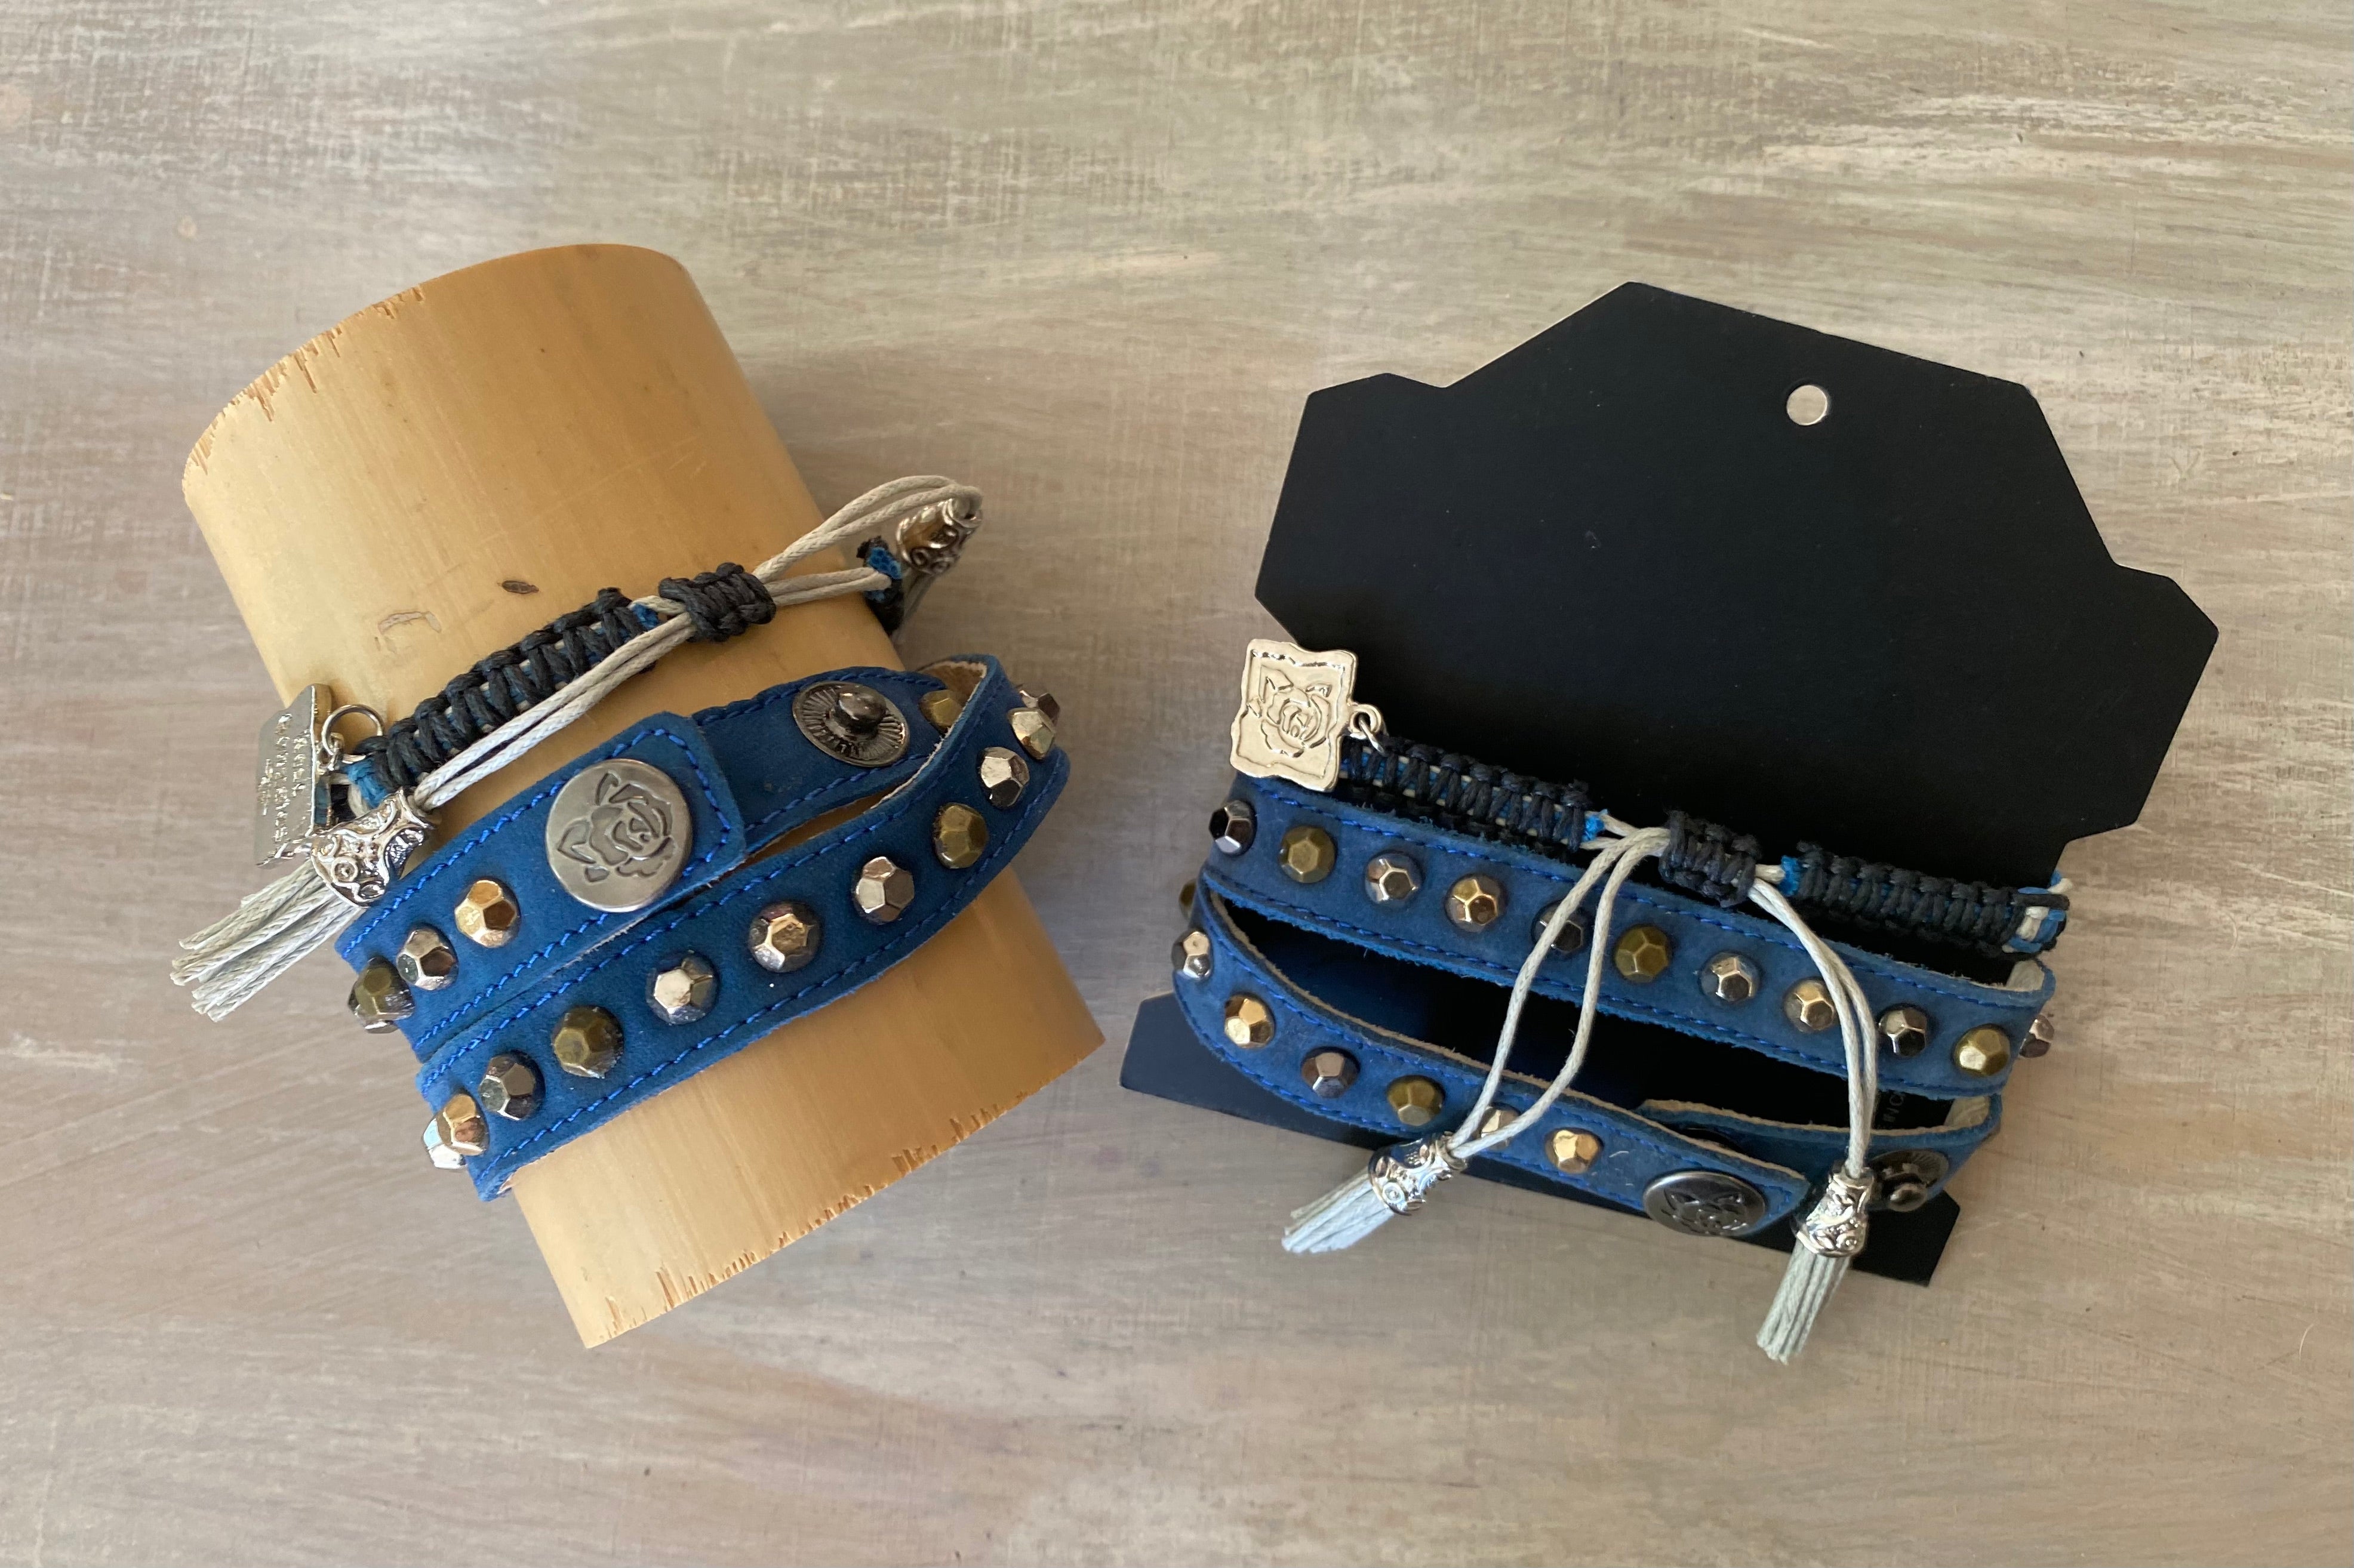 Game Day: Blue & White- Macrame String Bracelet Set